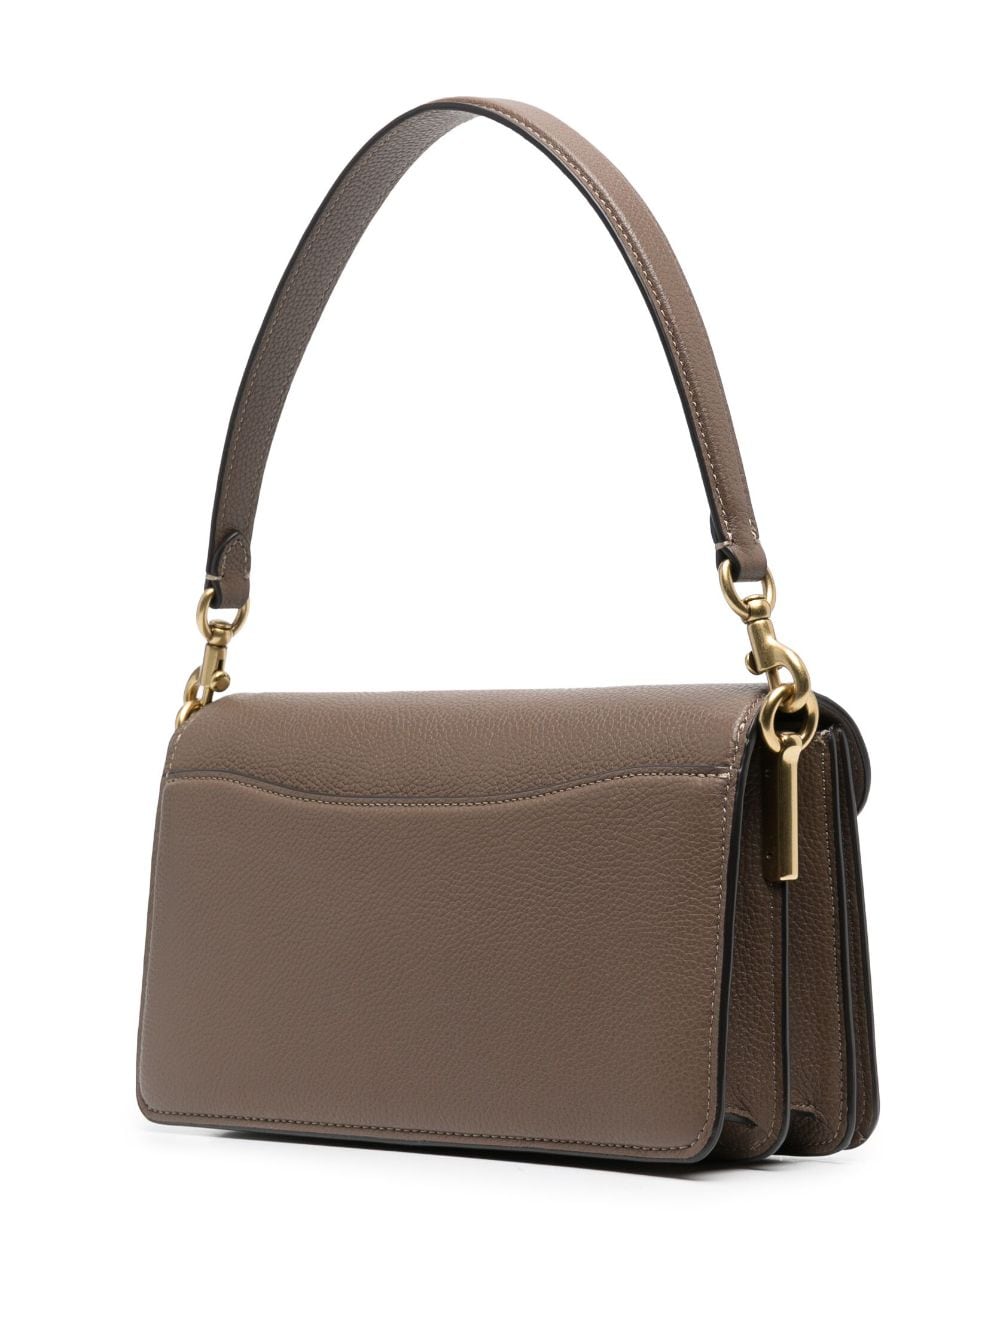 COACH Stylish and Versatile Shoulder Handbag for Women